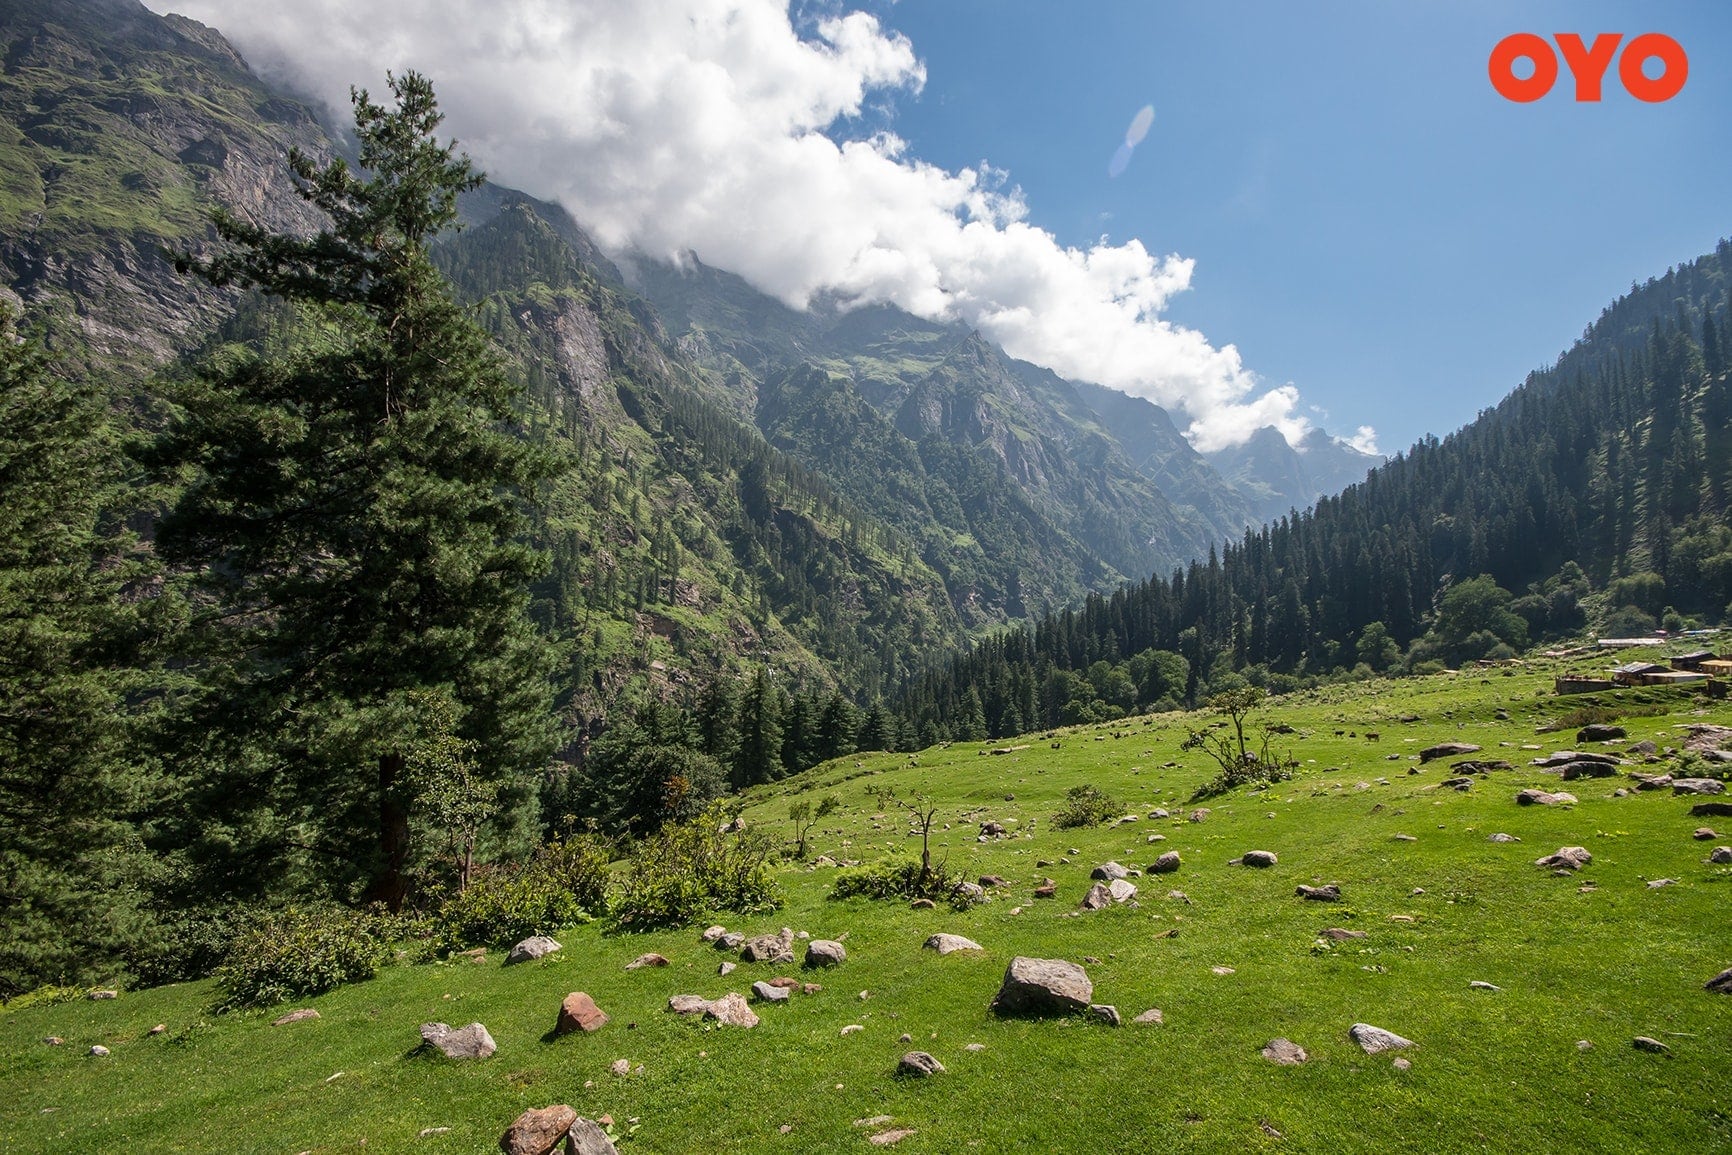 Parvati Valley Trek - one of the best trekking destinations in India